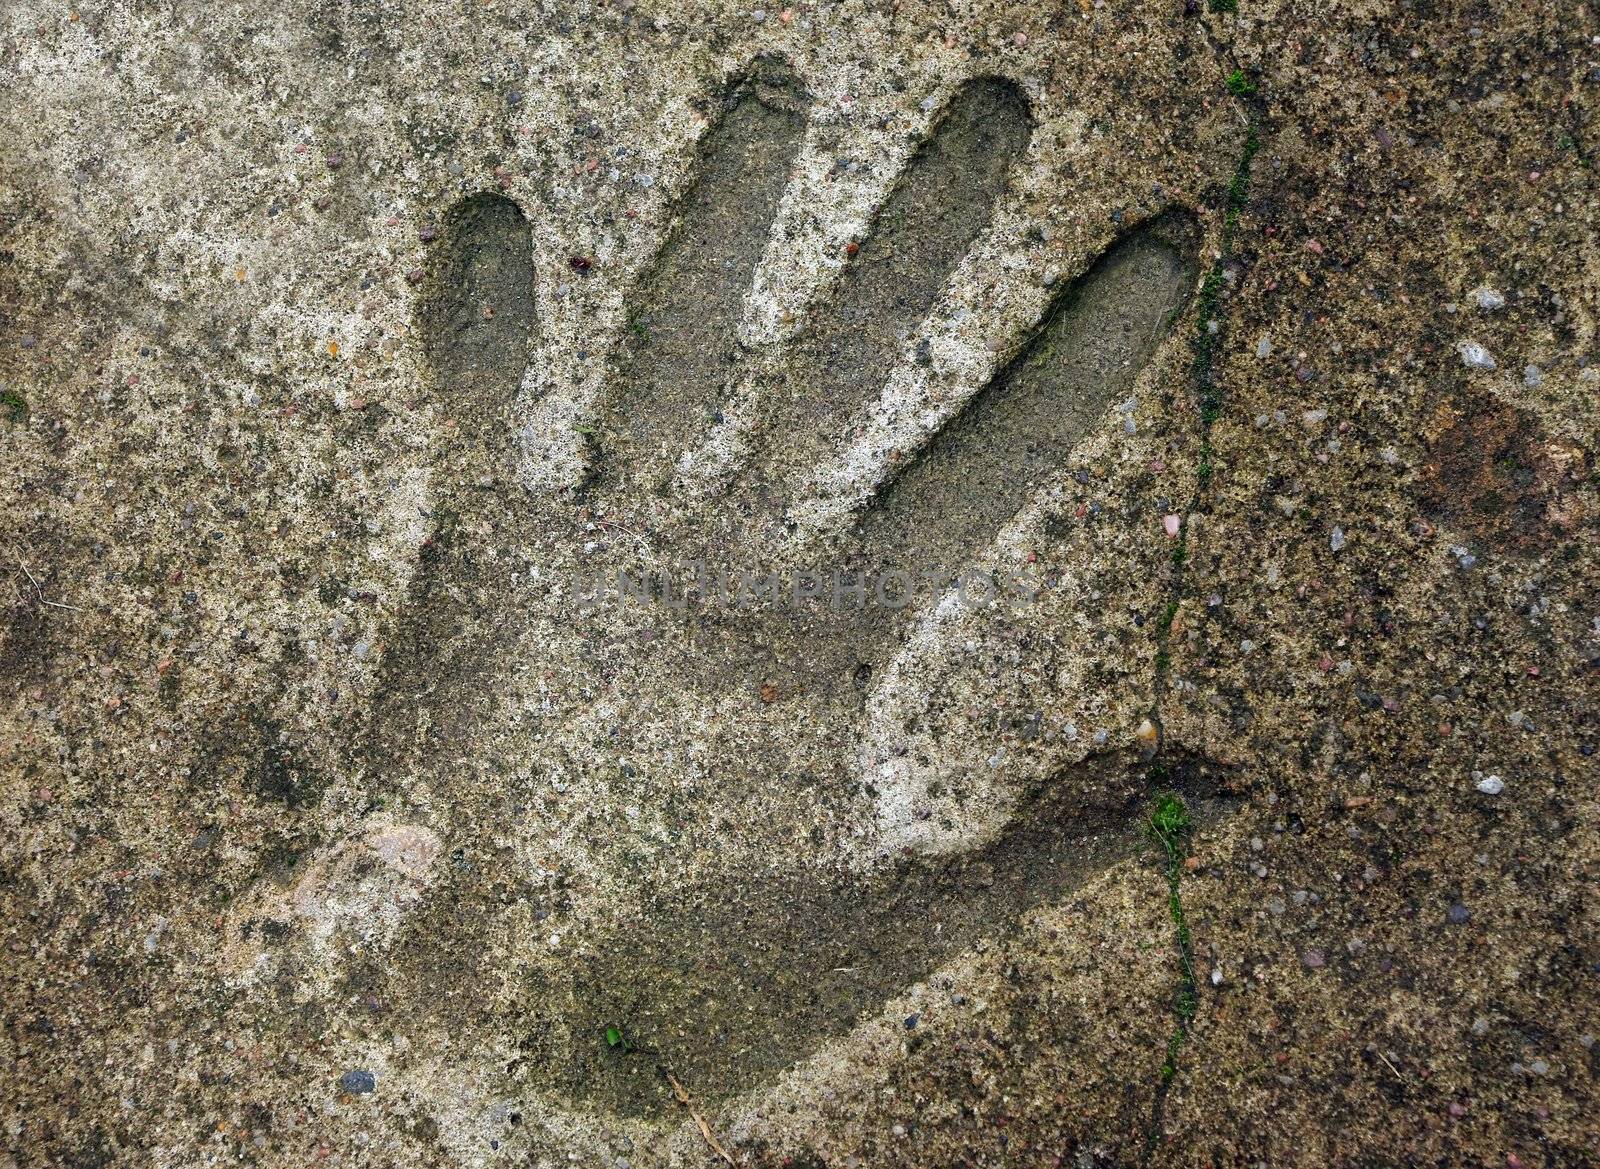 Human handprint in old weathered concrete floor